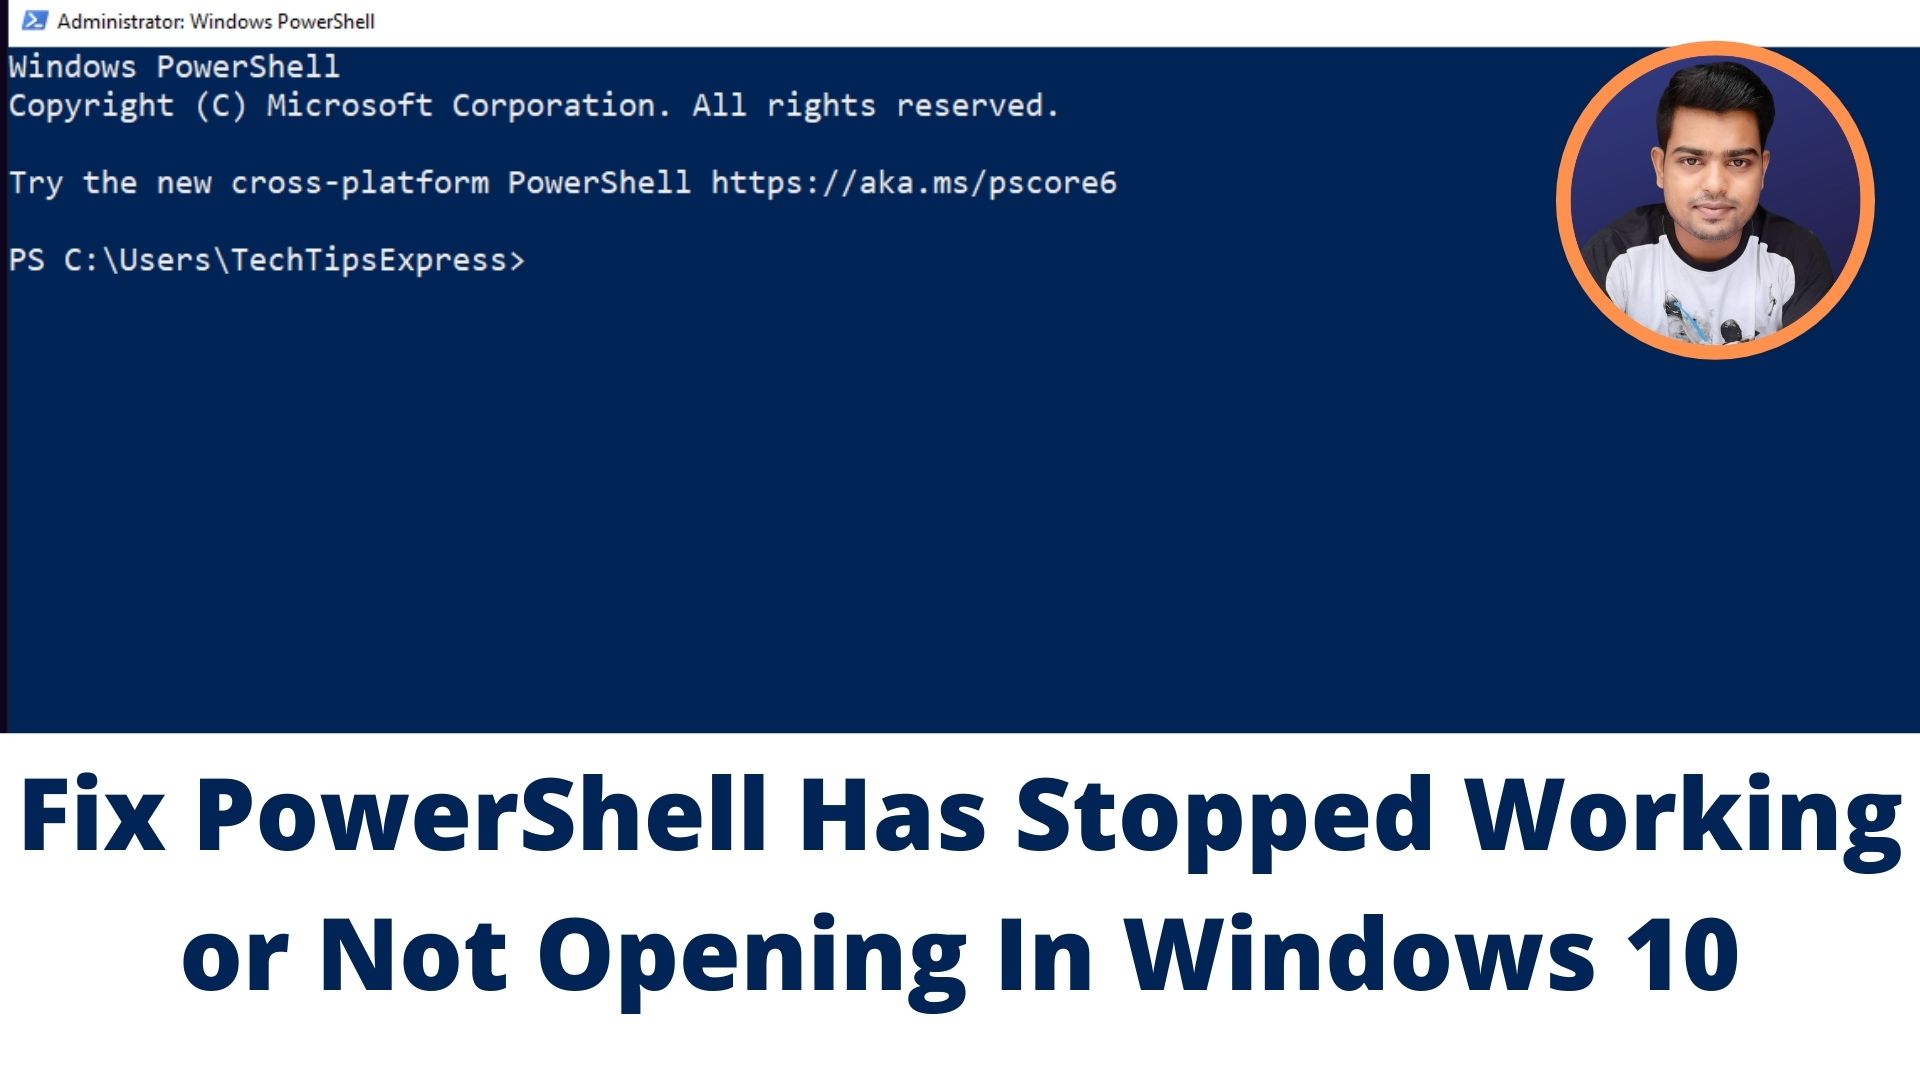 windows powershell has stopped working windows 10 2019